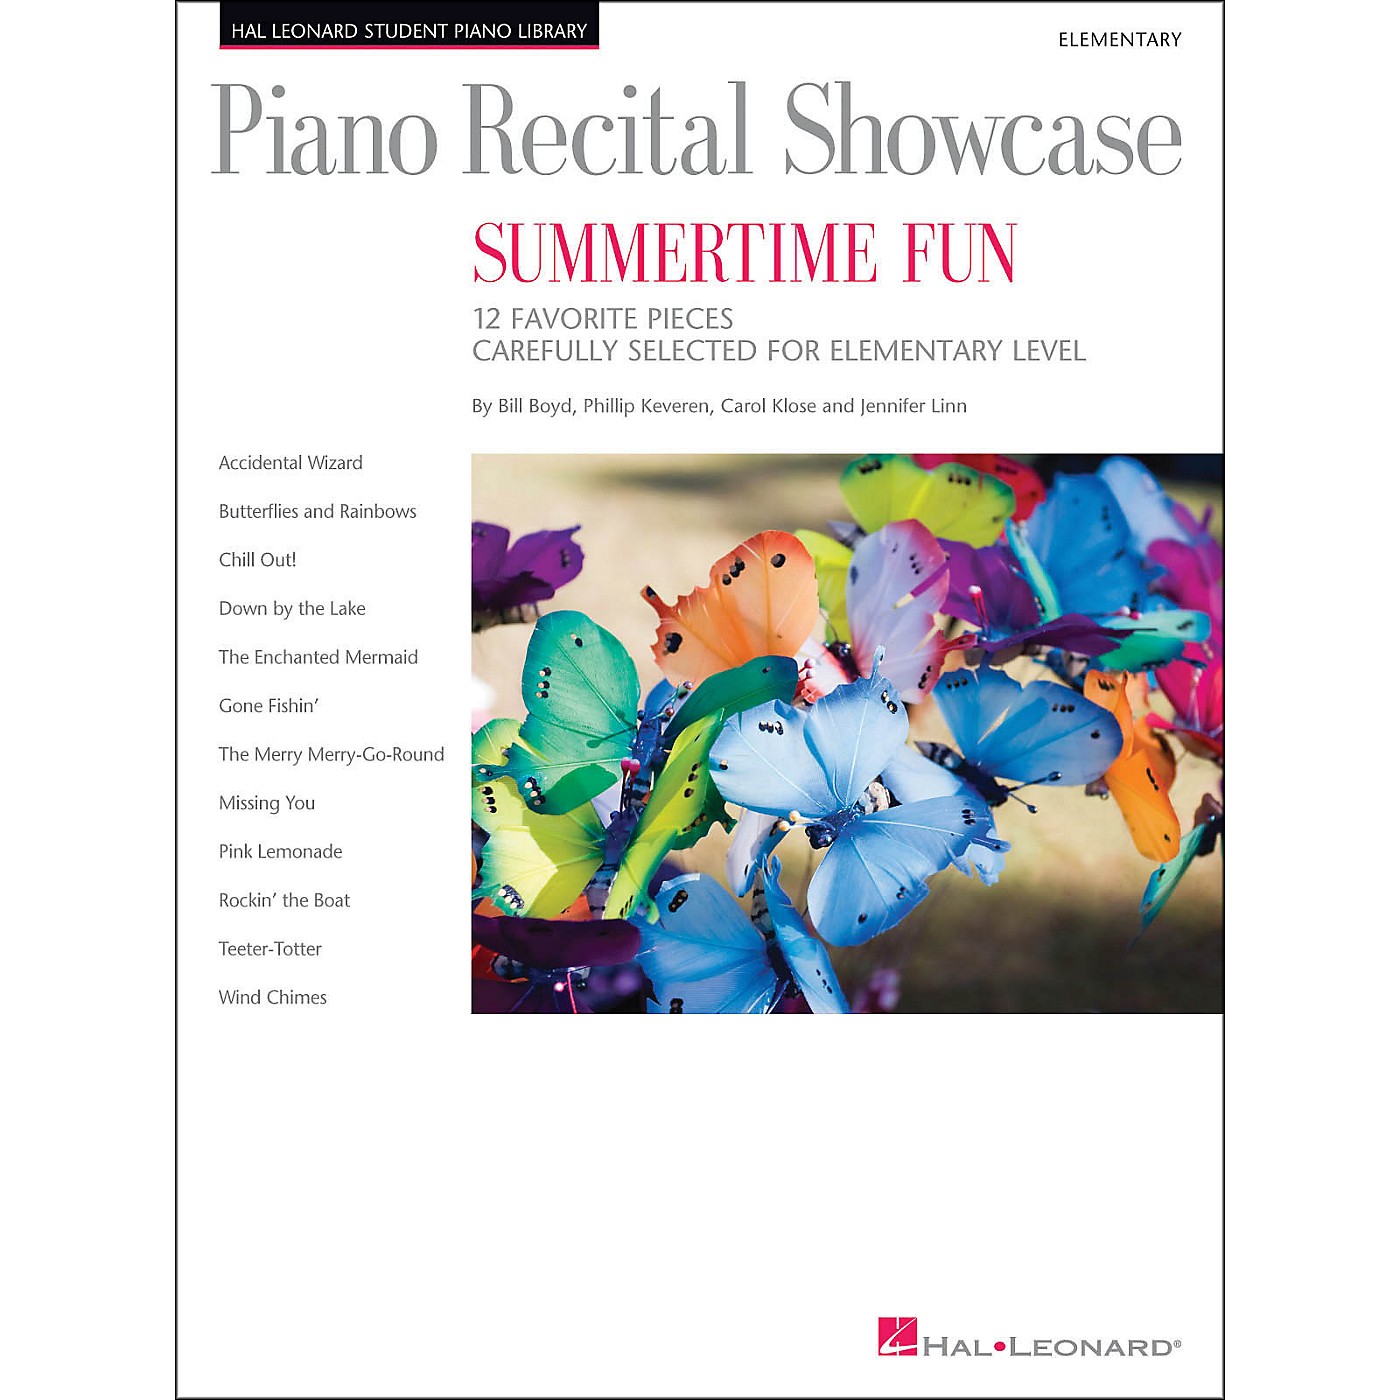 Hal Leonard Piano Recital Showcase - Summertime Fun - Elementary Level Book thumbnail